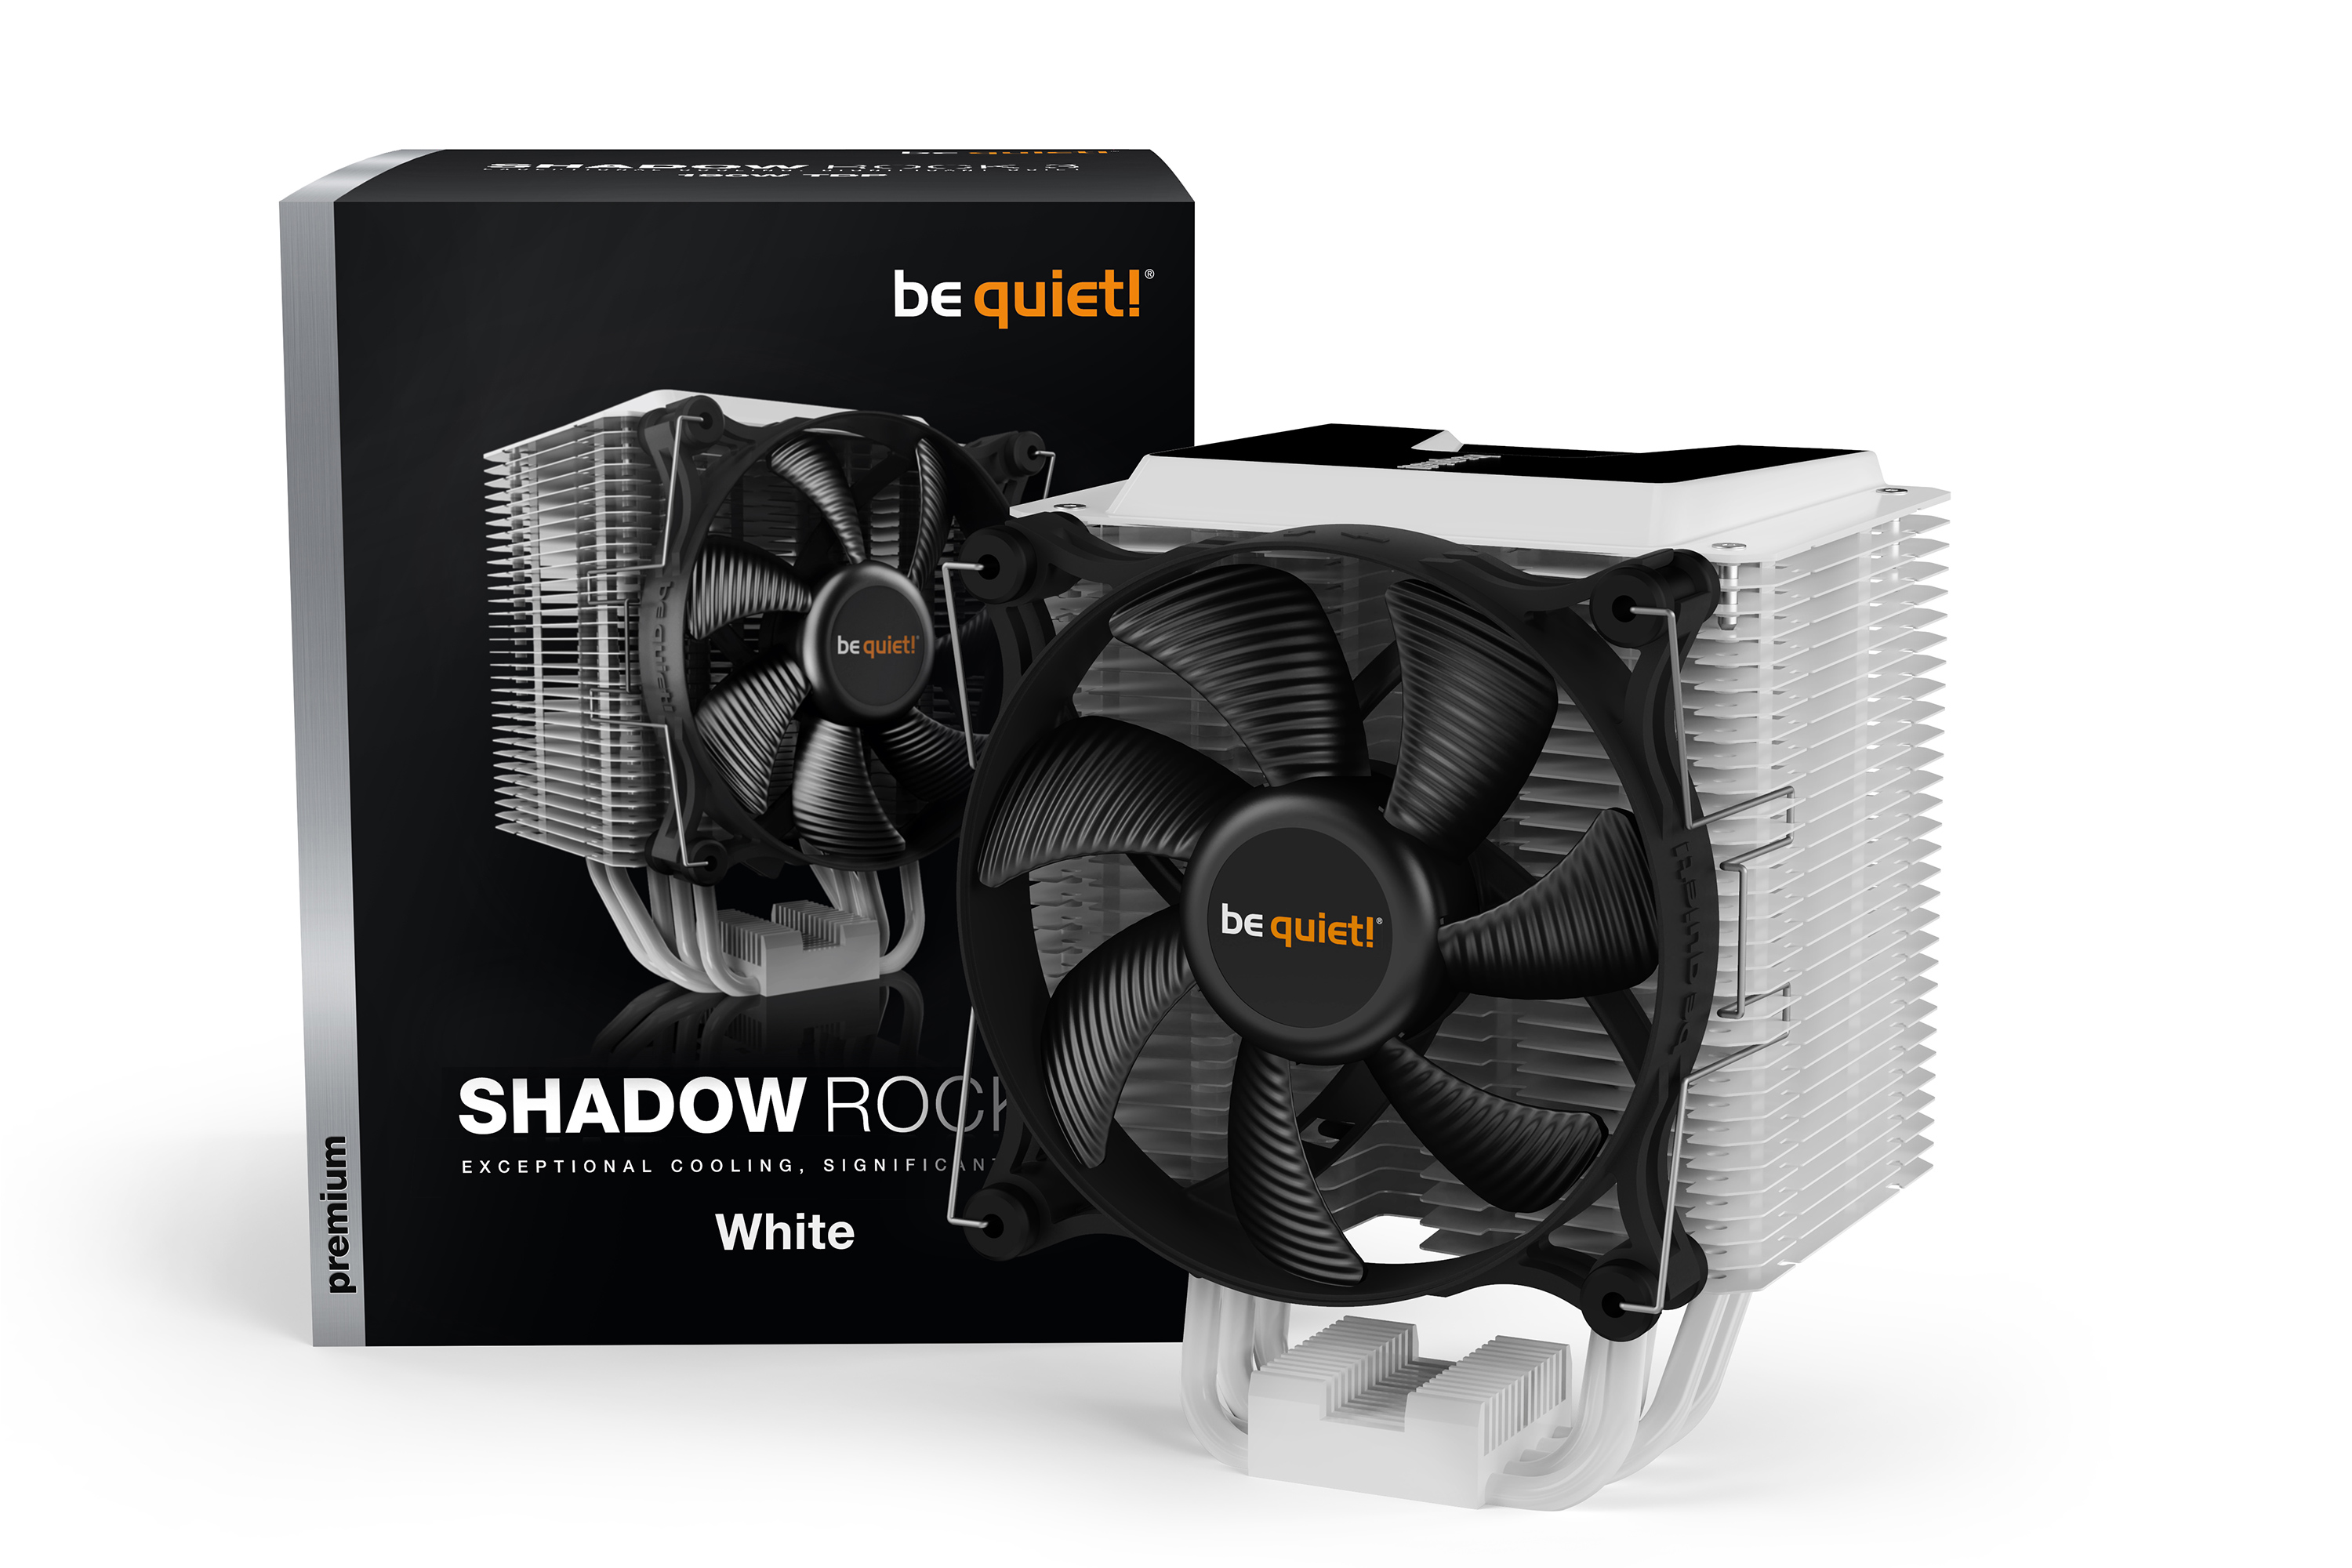 bk005 w h 6 Be Quiet เปิดตัว Shadow Rock 3 White: ตัวเลือกสีเพิ่มเติมสำหรับ CPU cooler ตัวทำความเย็นแบบ อสมมาตรที่เข้ากันได้สูงตอนนี้มีสีขาวแล้ว